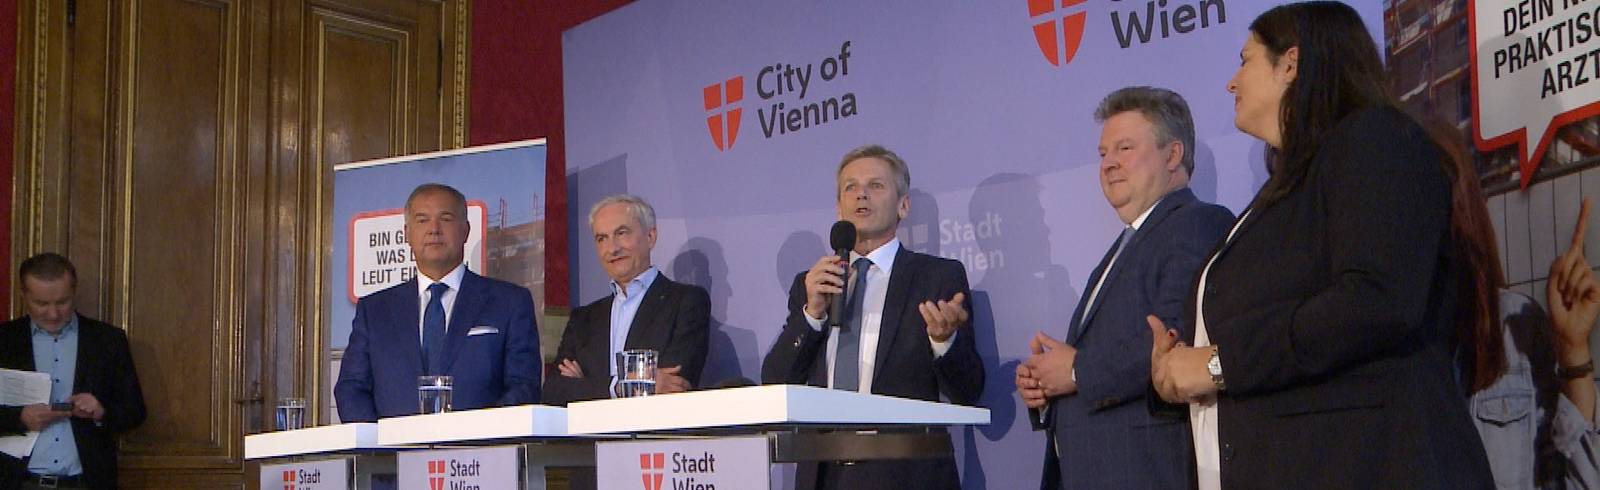 Kampagne: Wien baut vor